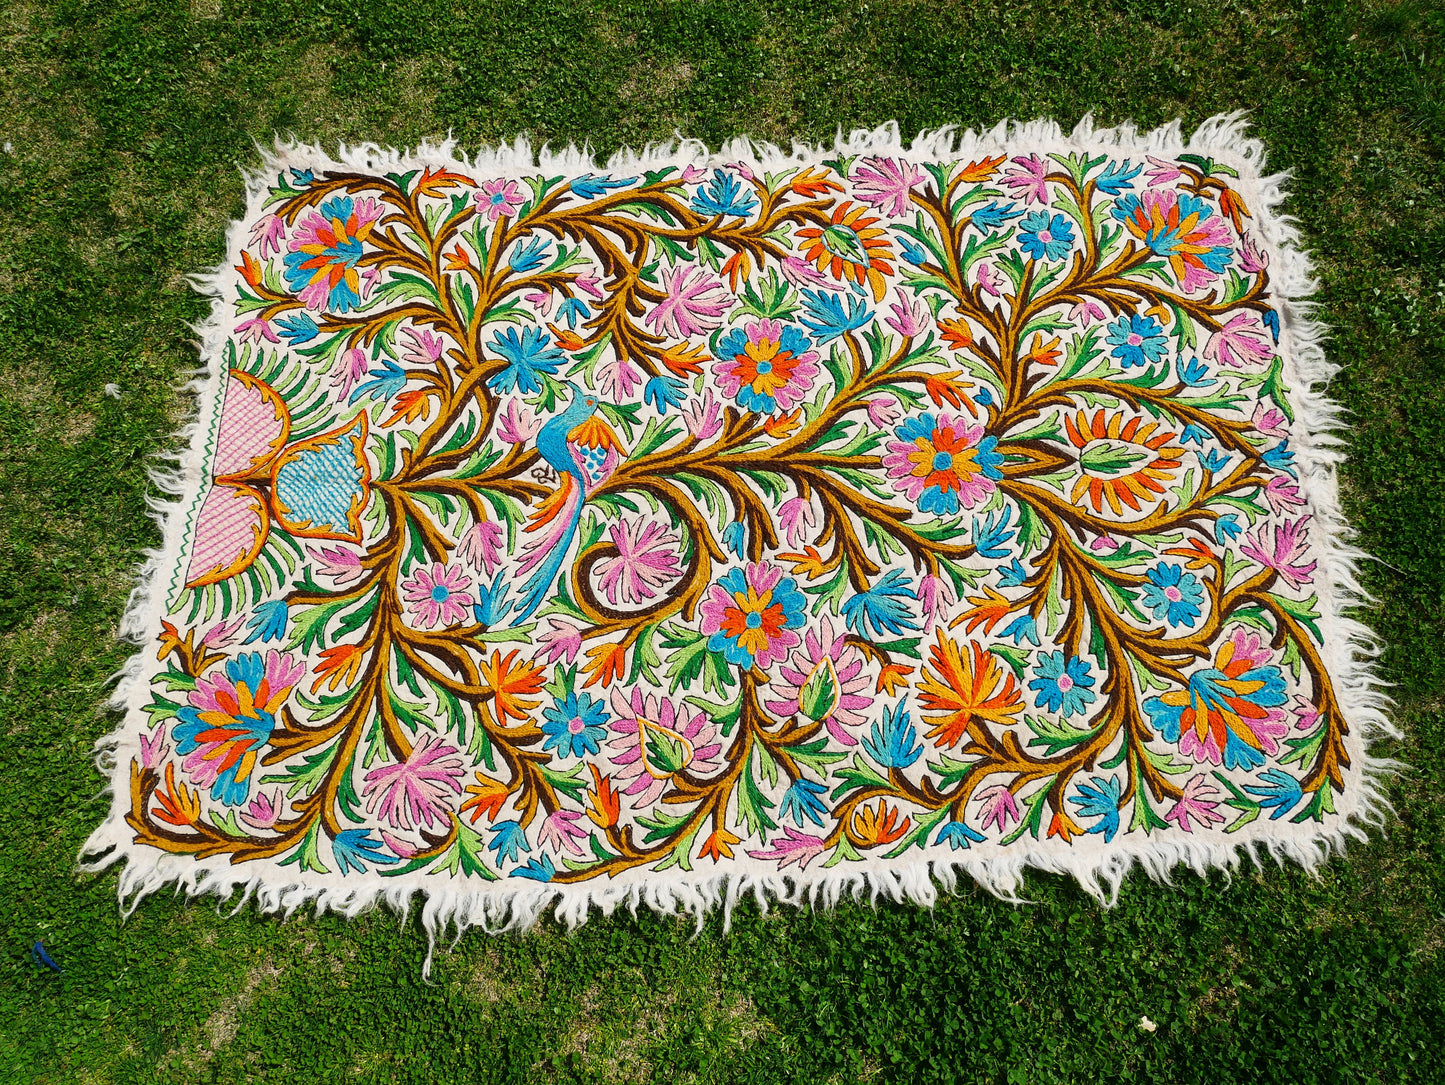 Boho wool rug "Magical Jungle" traditional Namda felt rug from Kashmir